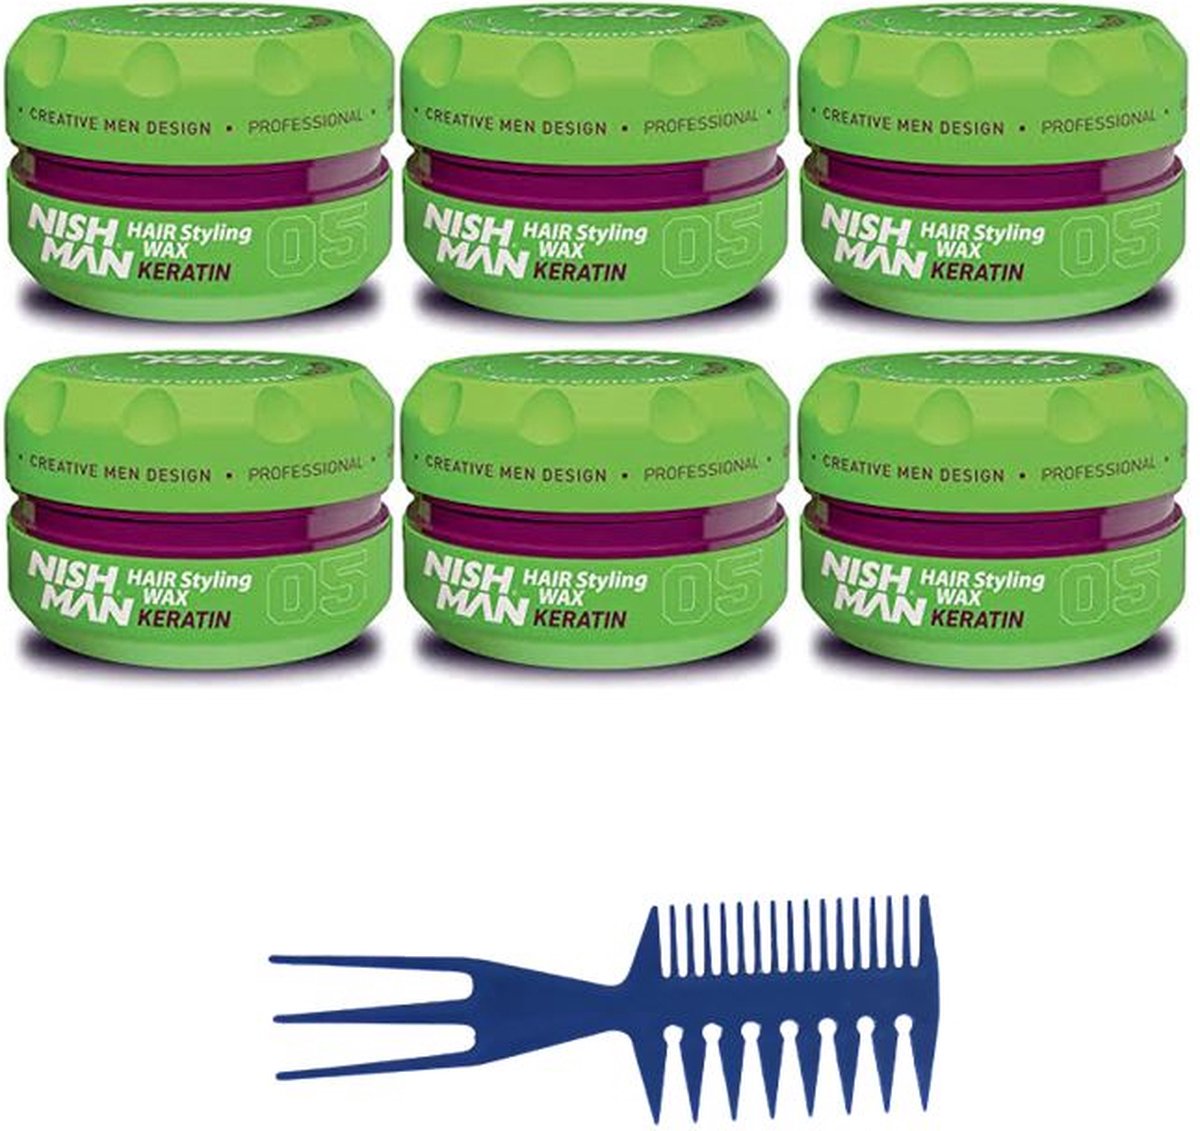 Nishman 05 Hair Styling Wax Keratin 6 stuks + Gratis Styling Comb